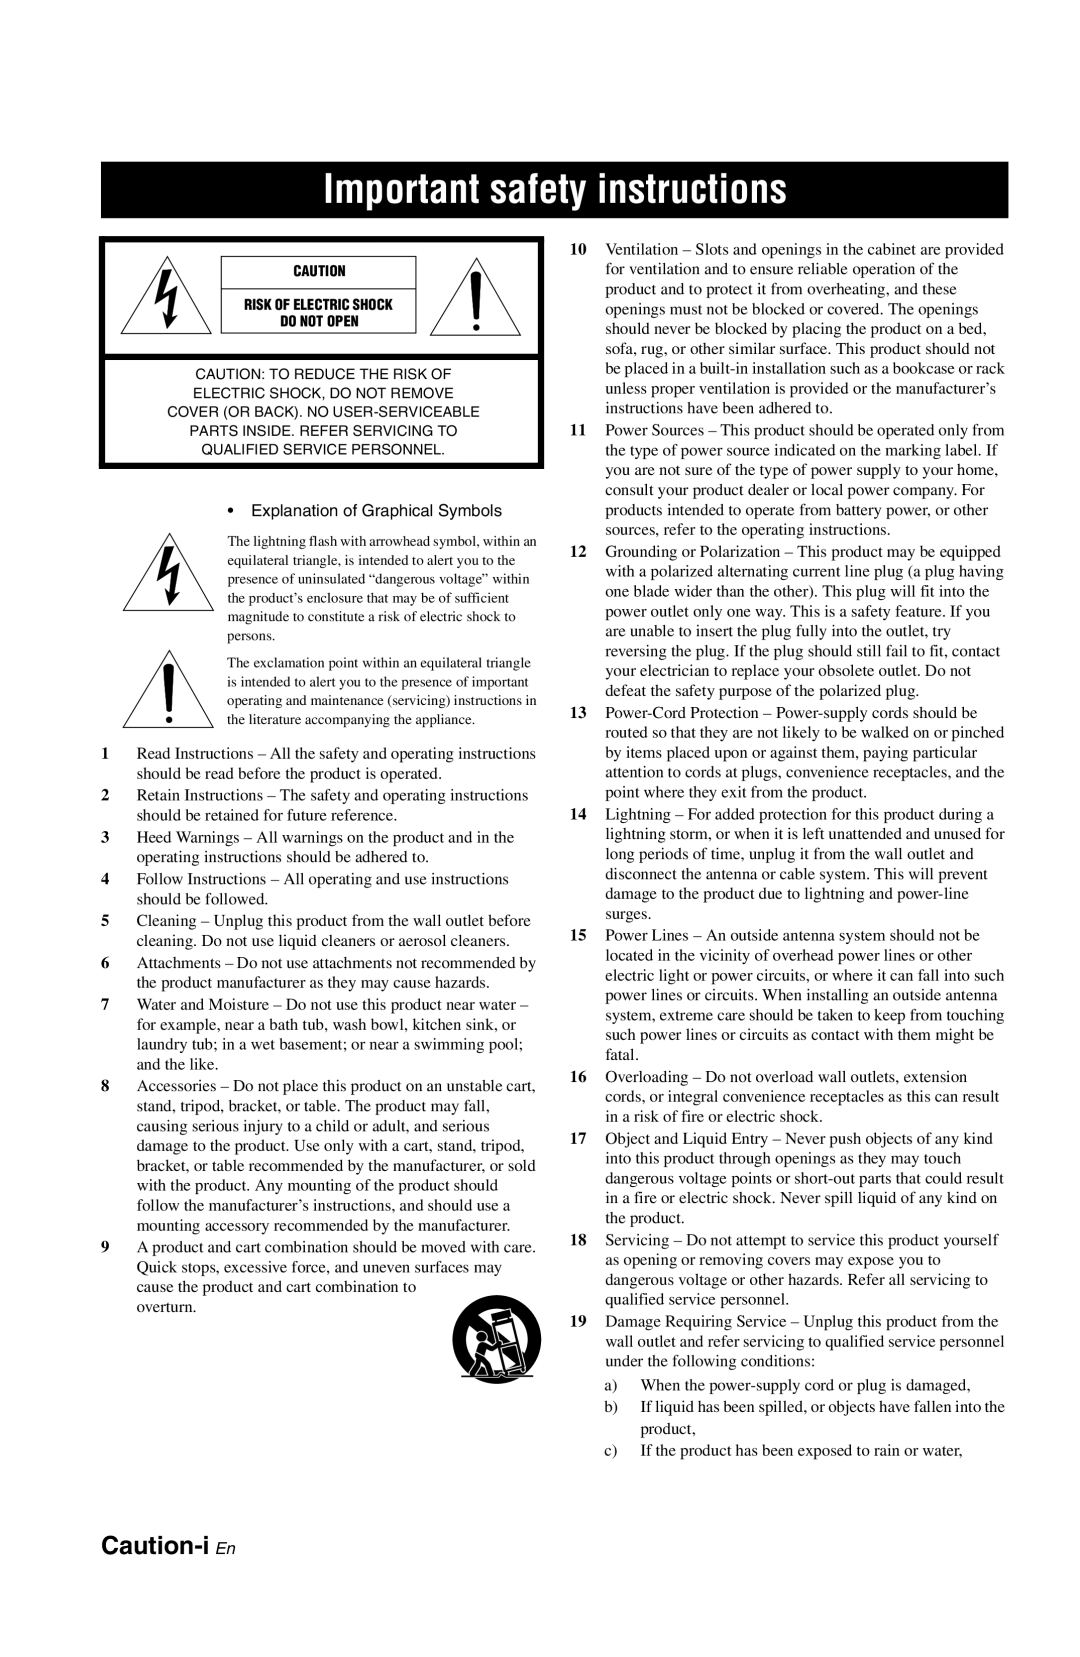 Yamaha RX-V861 owner manual Caution-i En, Important safety instructions 